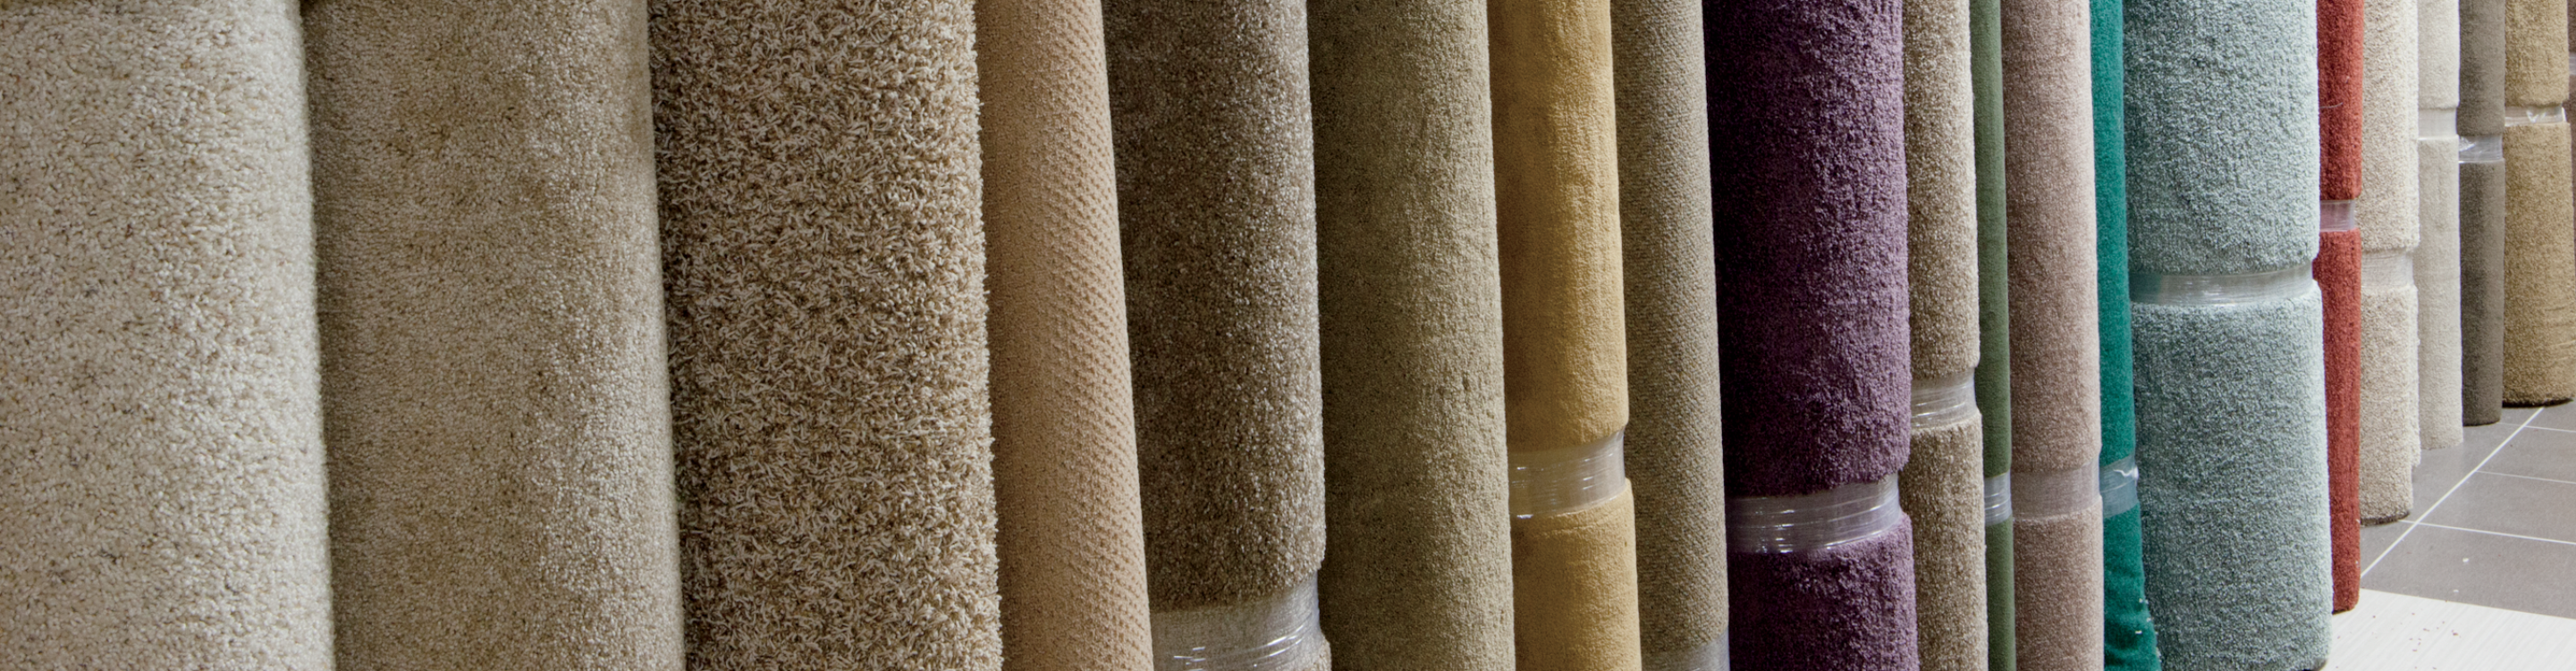 carpet remnants carpet rolls in various colors